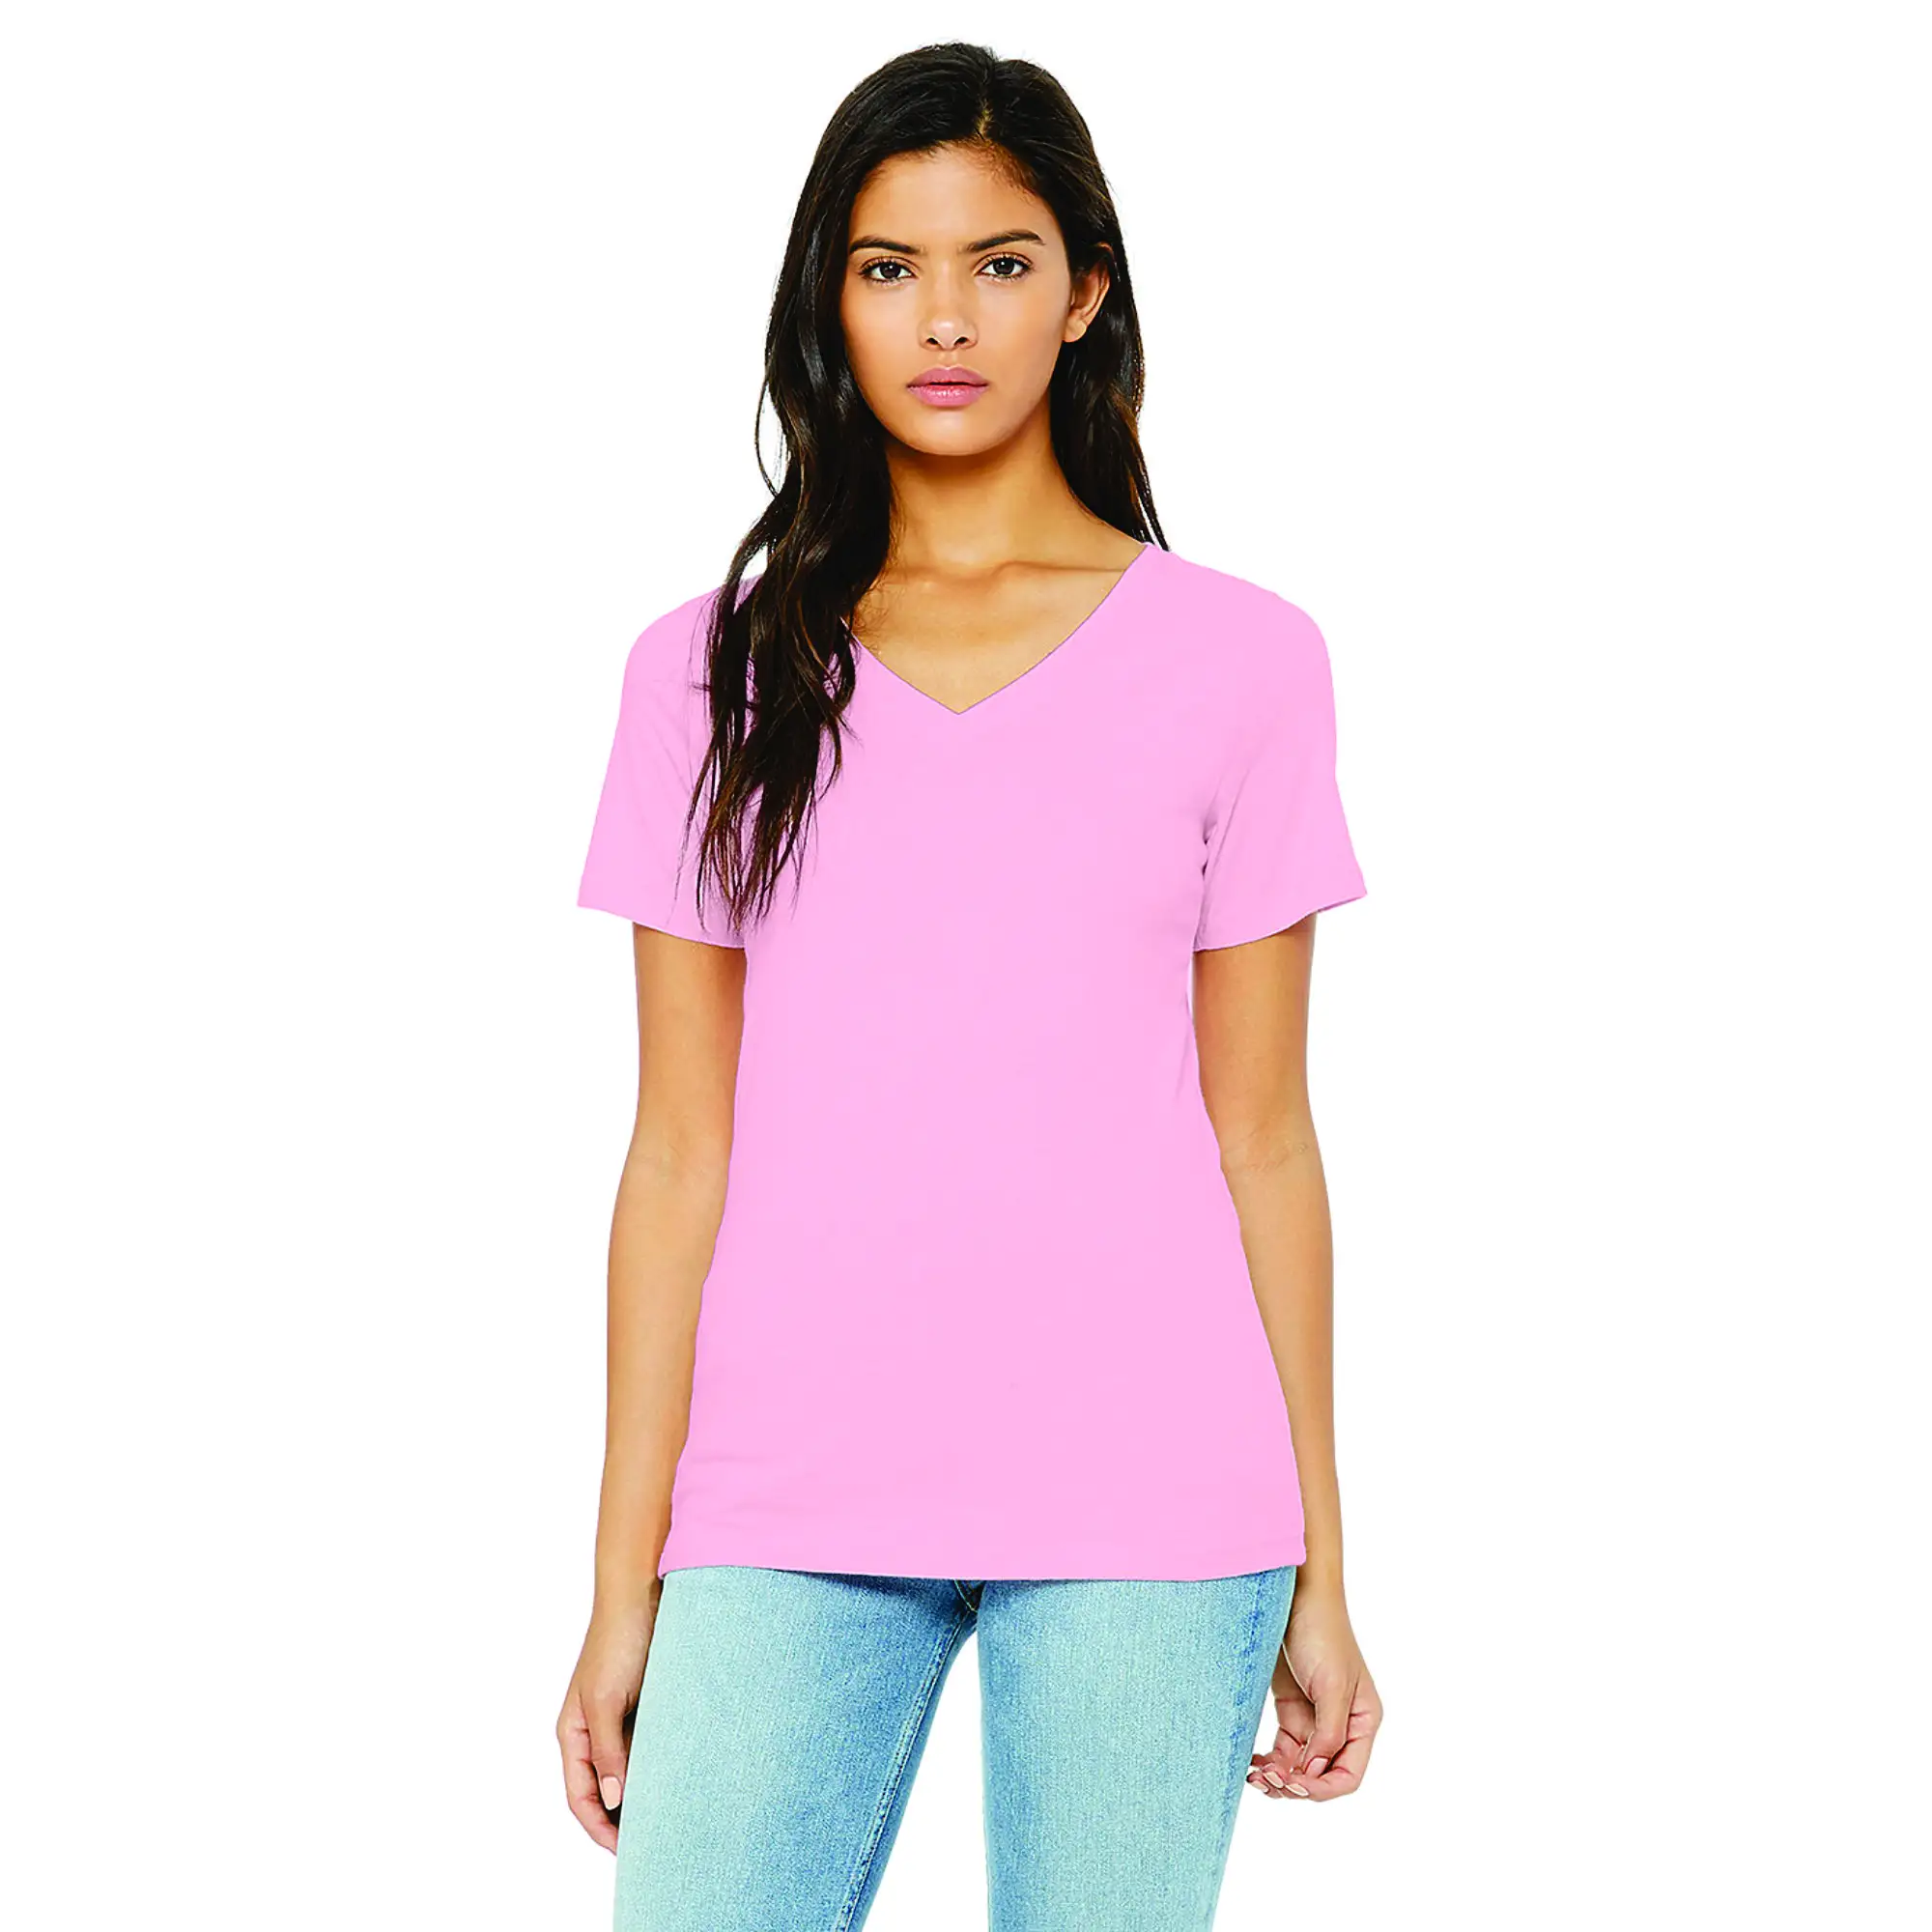 100% Airlume Combed and Ring Spun Cotton 32 싱글 4.2 oz 핑크 여성 편안한 저지 반팔 v 넥 티셔츠